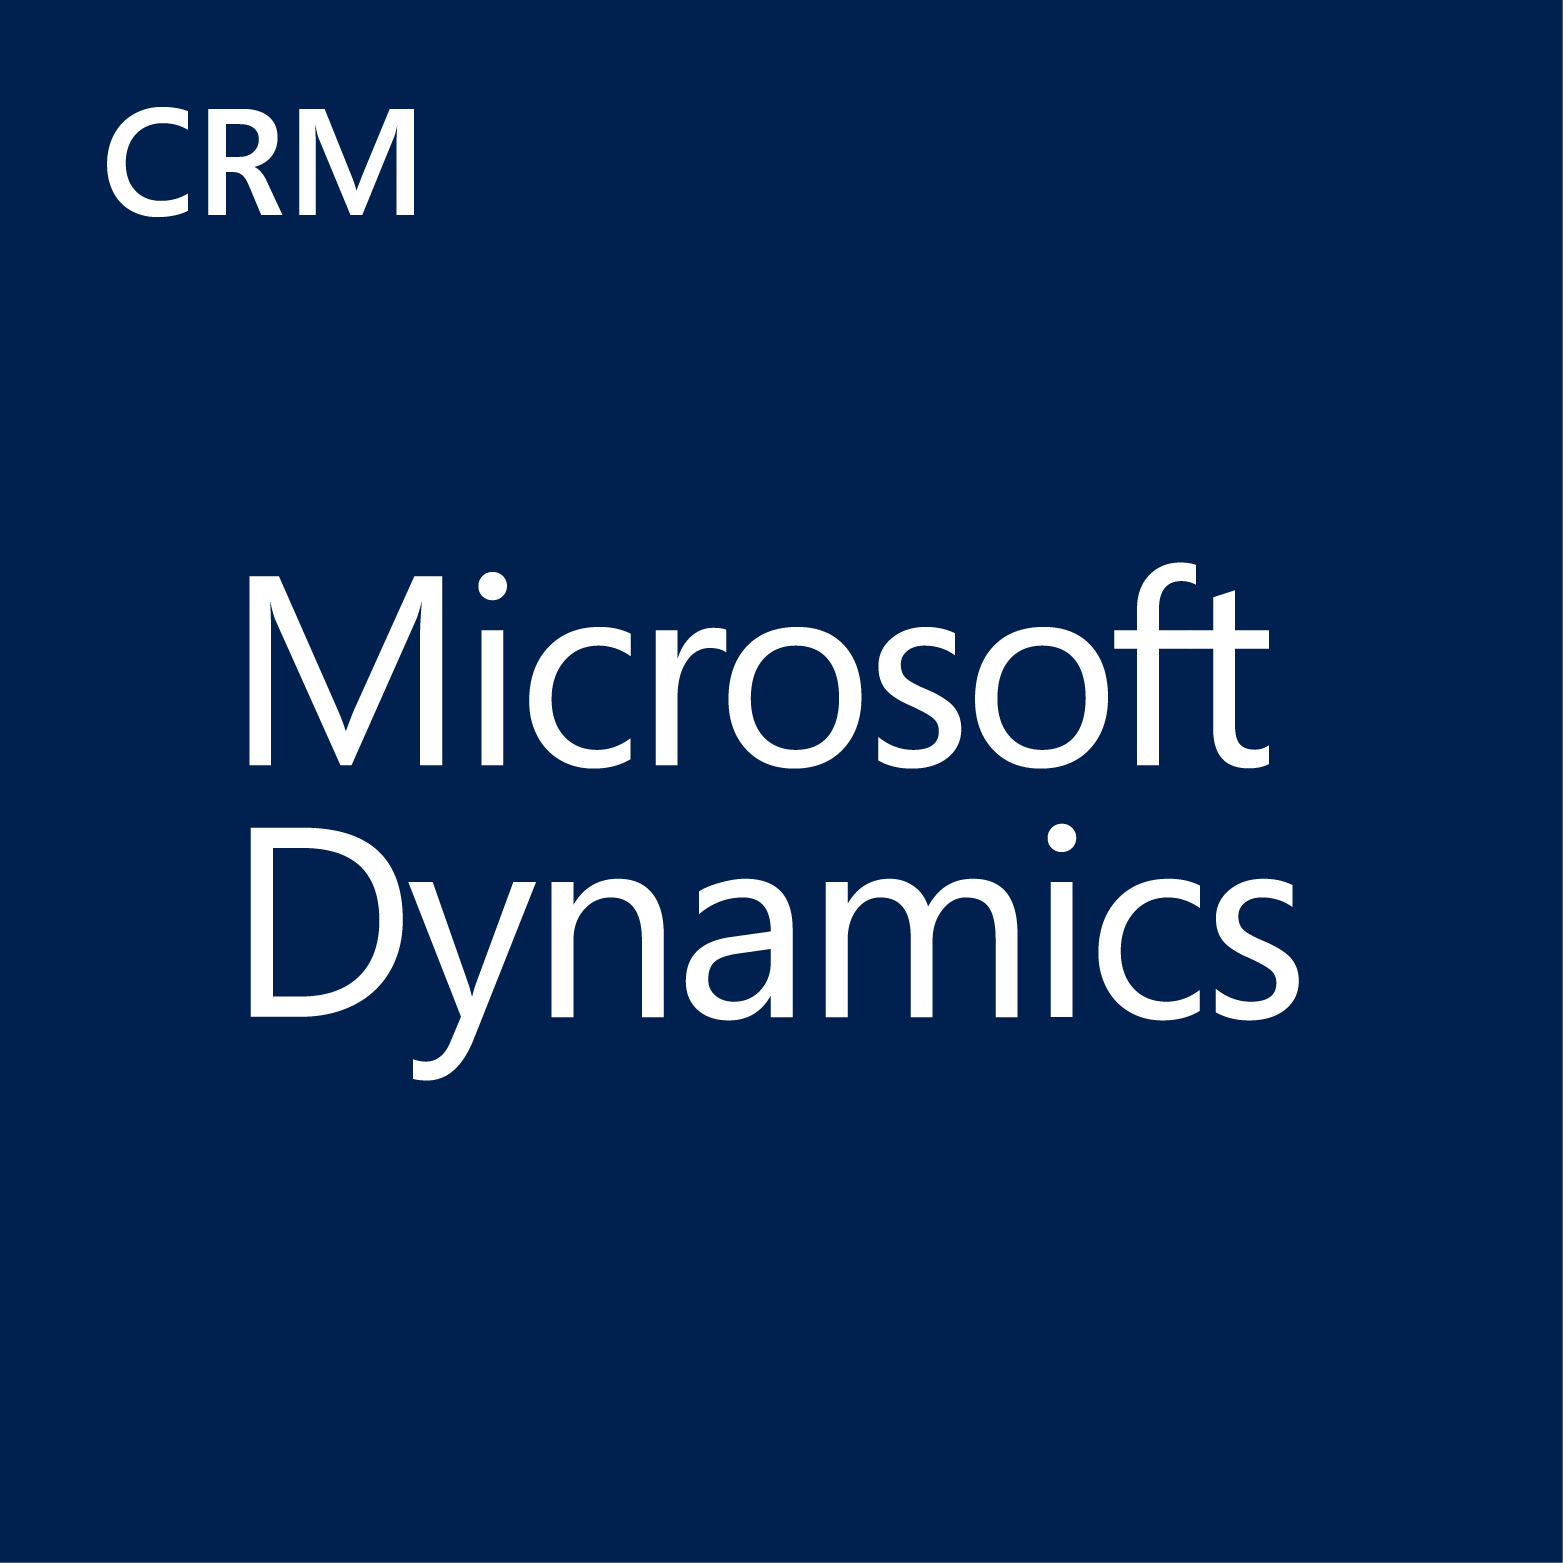 Microsoft Dynamics Business Solutions Logo - Microsoft Business Solutions | Corporate Renaissance Group